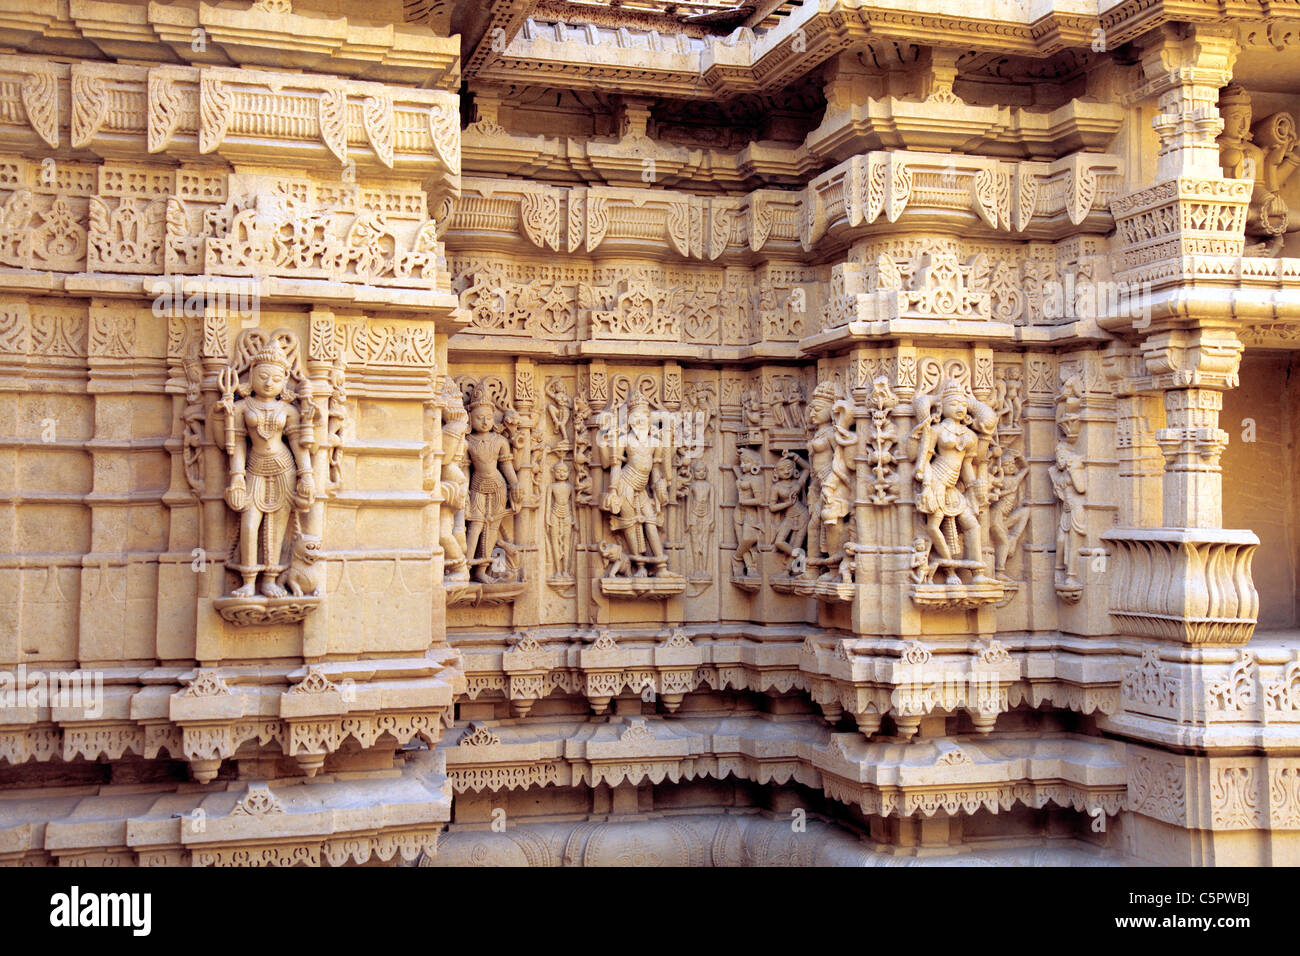 Jain temple, Jaisalmer, Rajasthan, India Banque D'Images